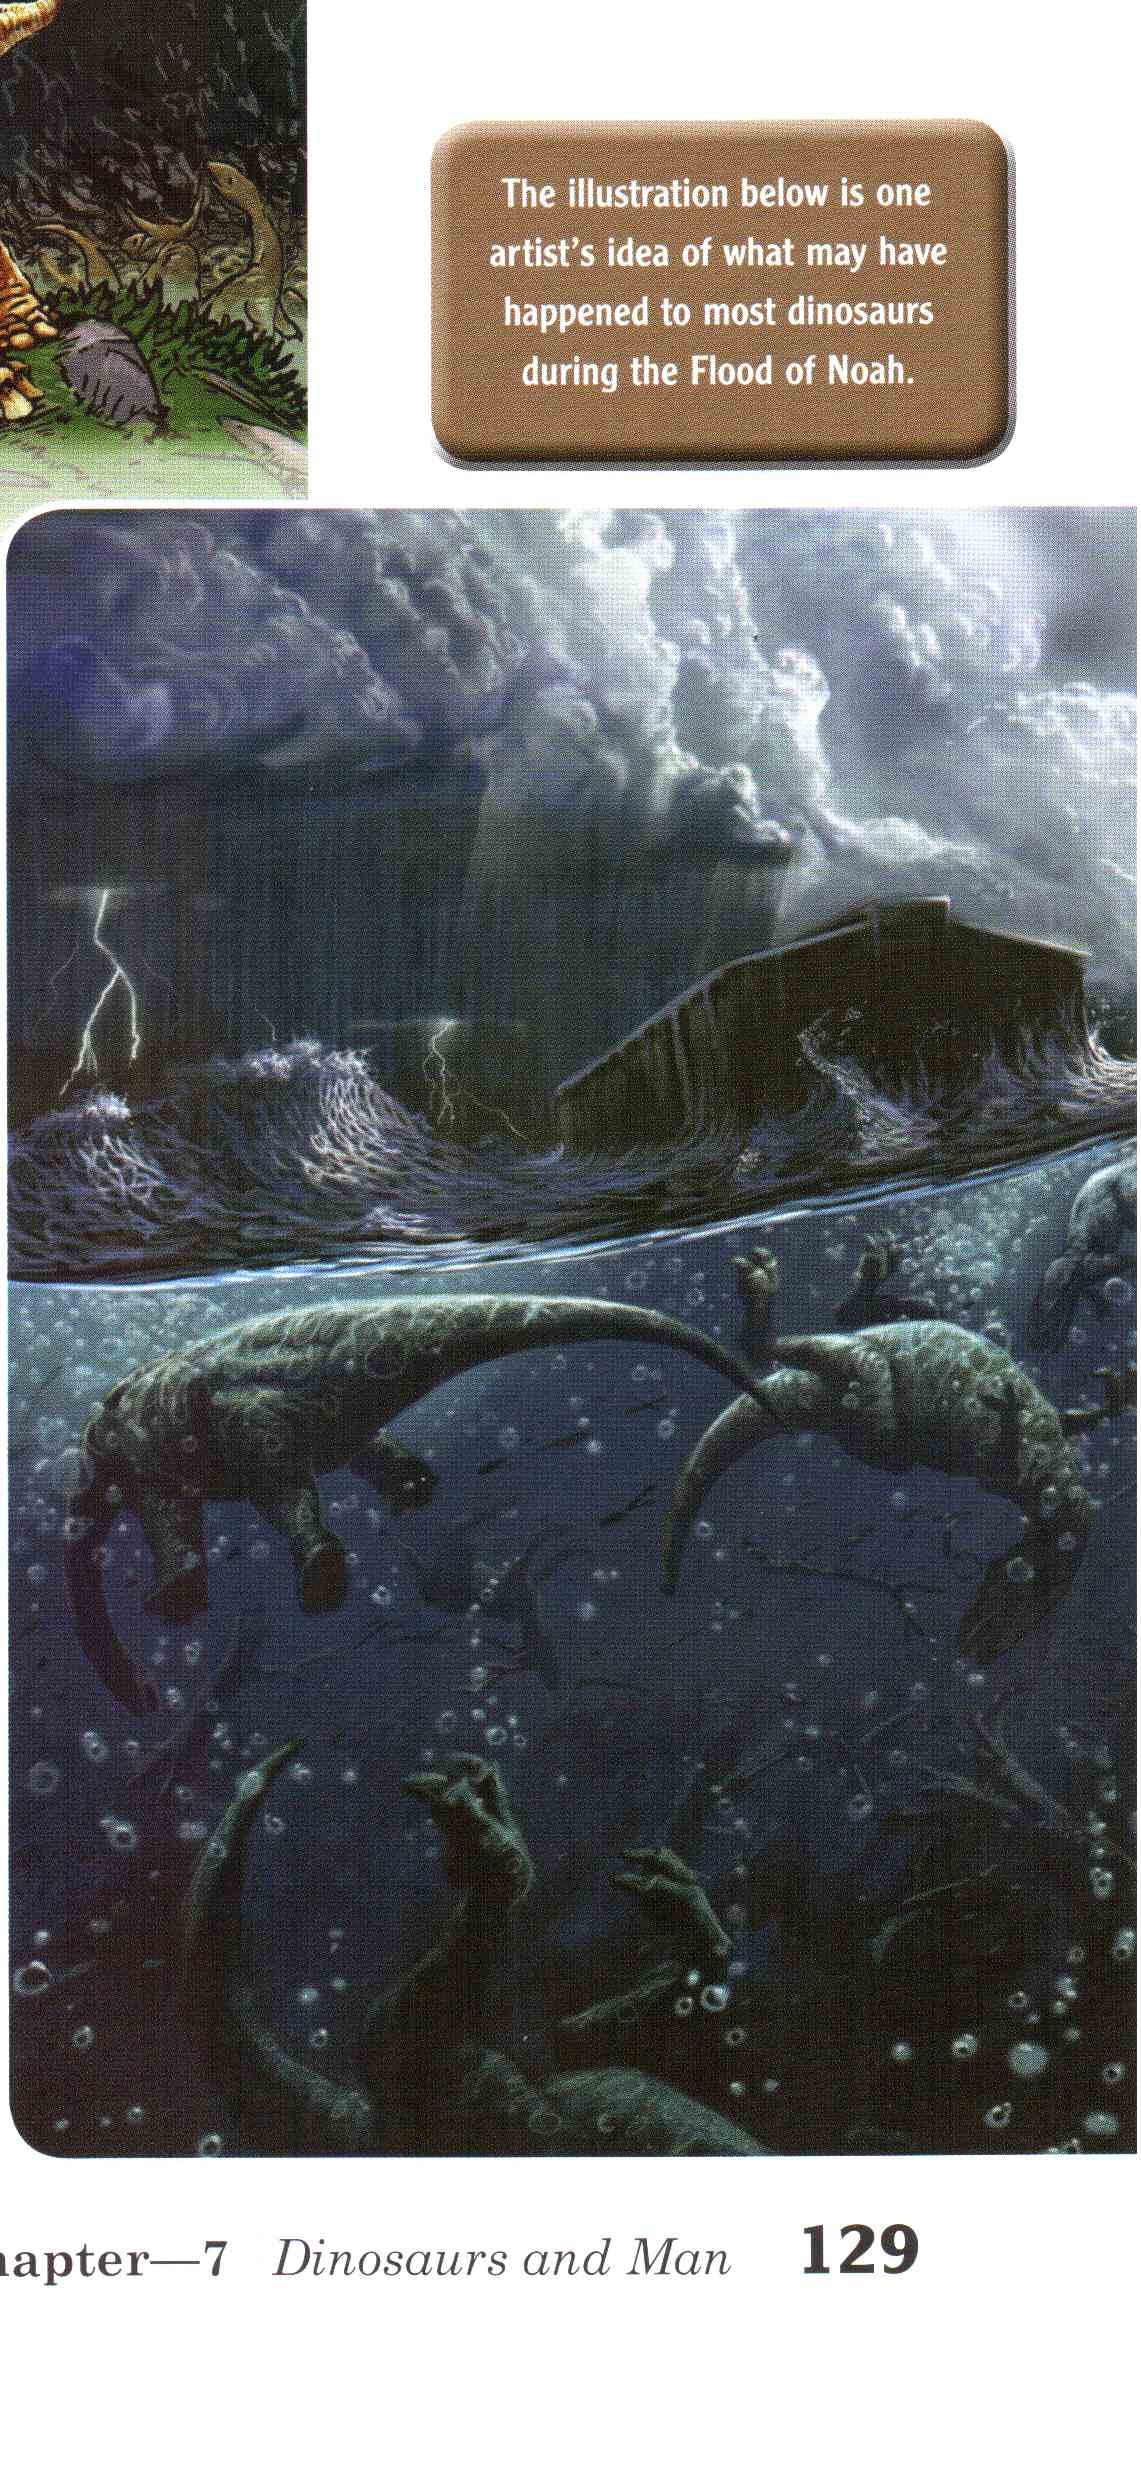 Dinosaurs drown beneath Noah's Ark.